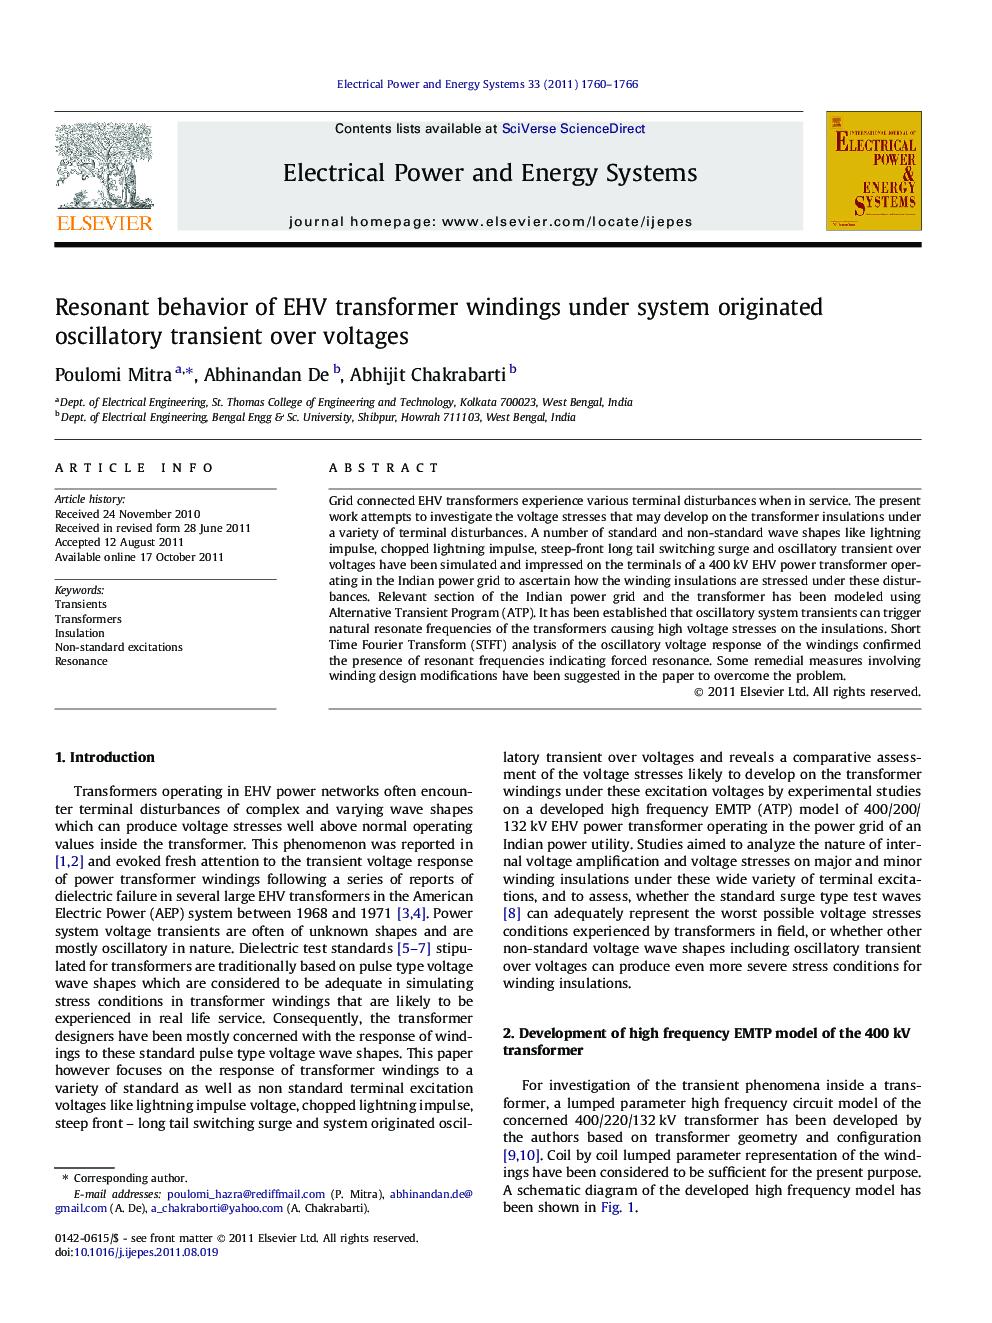 Resonant behavior of EHV transformer windings under system originated oscillatory transient over voltages